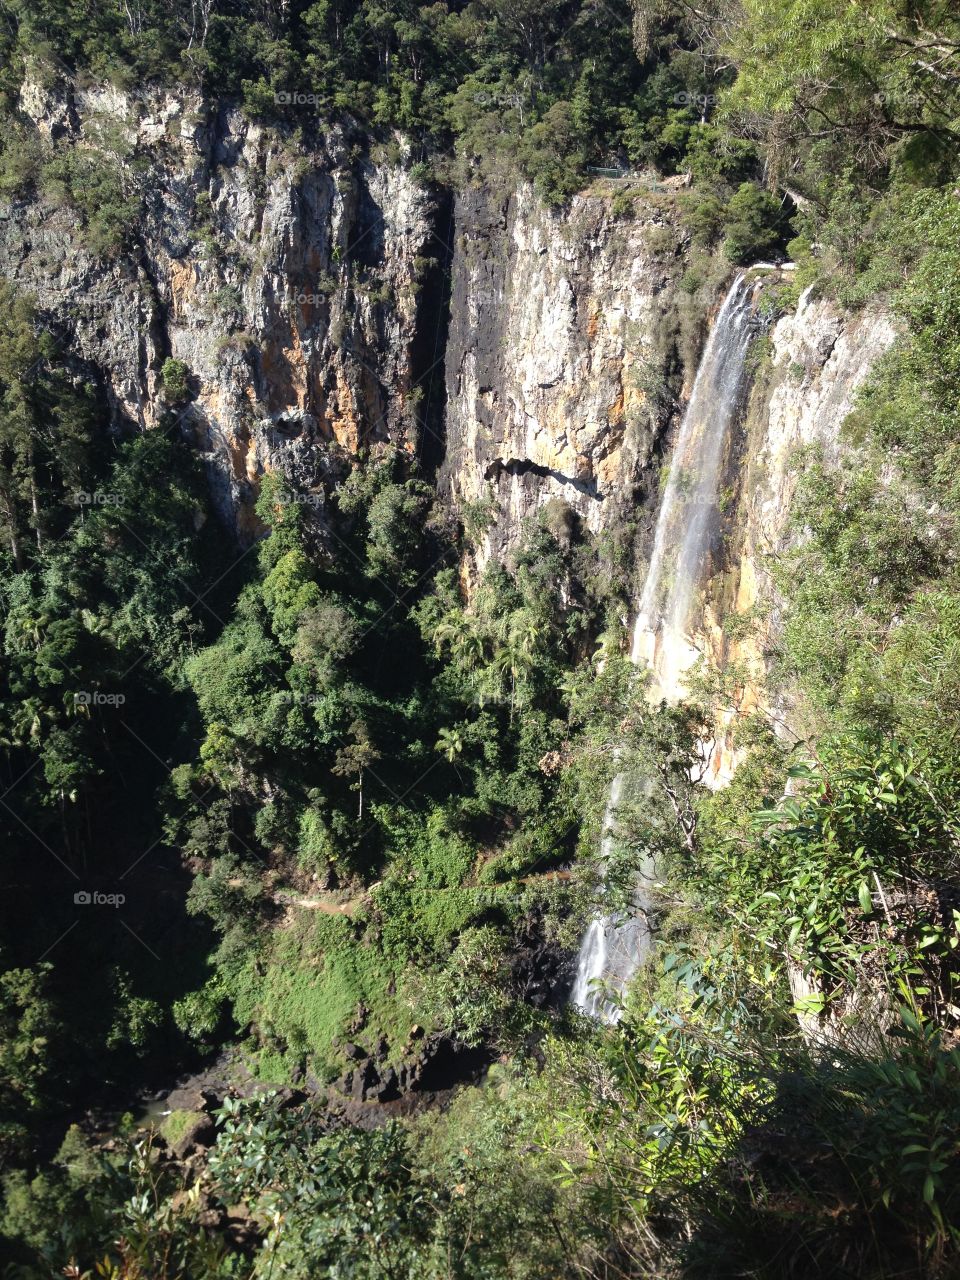 17 Hours hiking - totally worth it! Stunning Waterfalls  in Queensland, Australia 